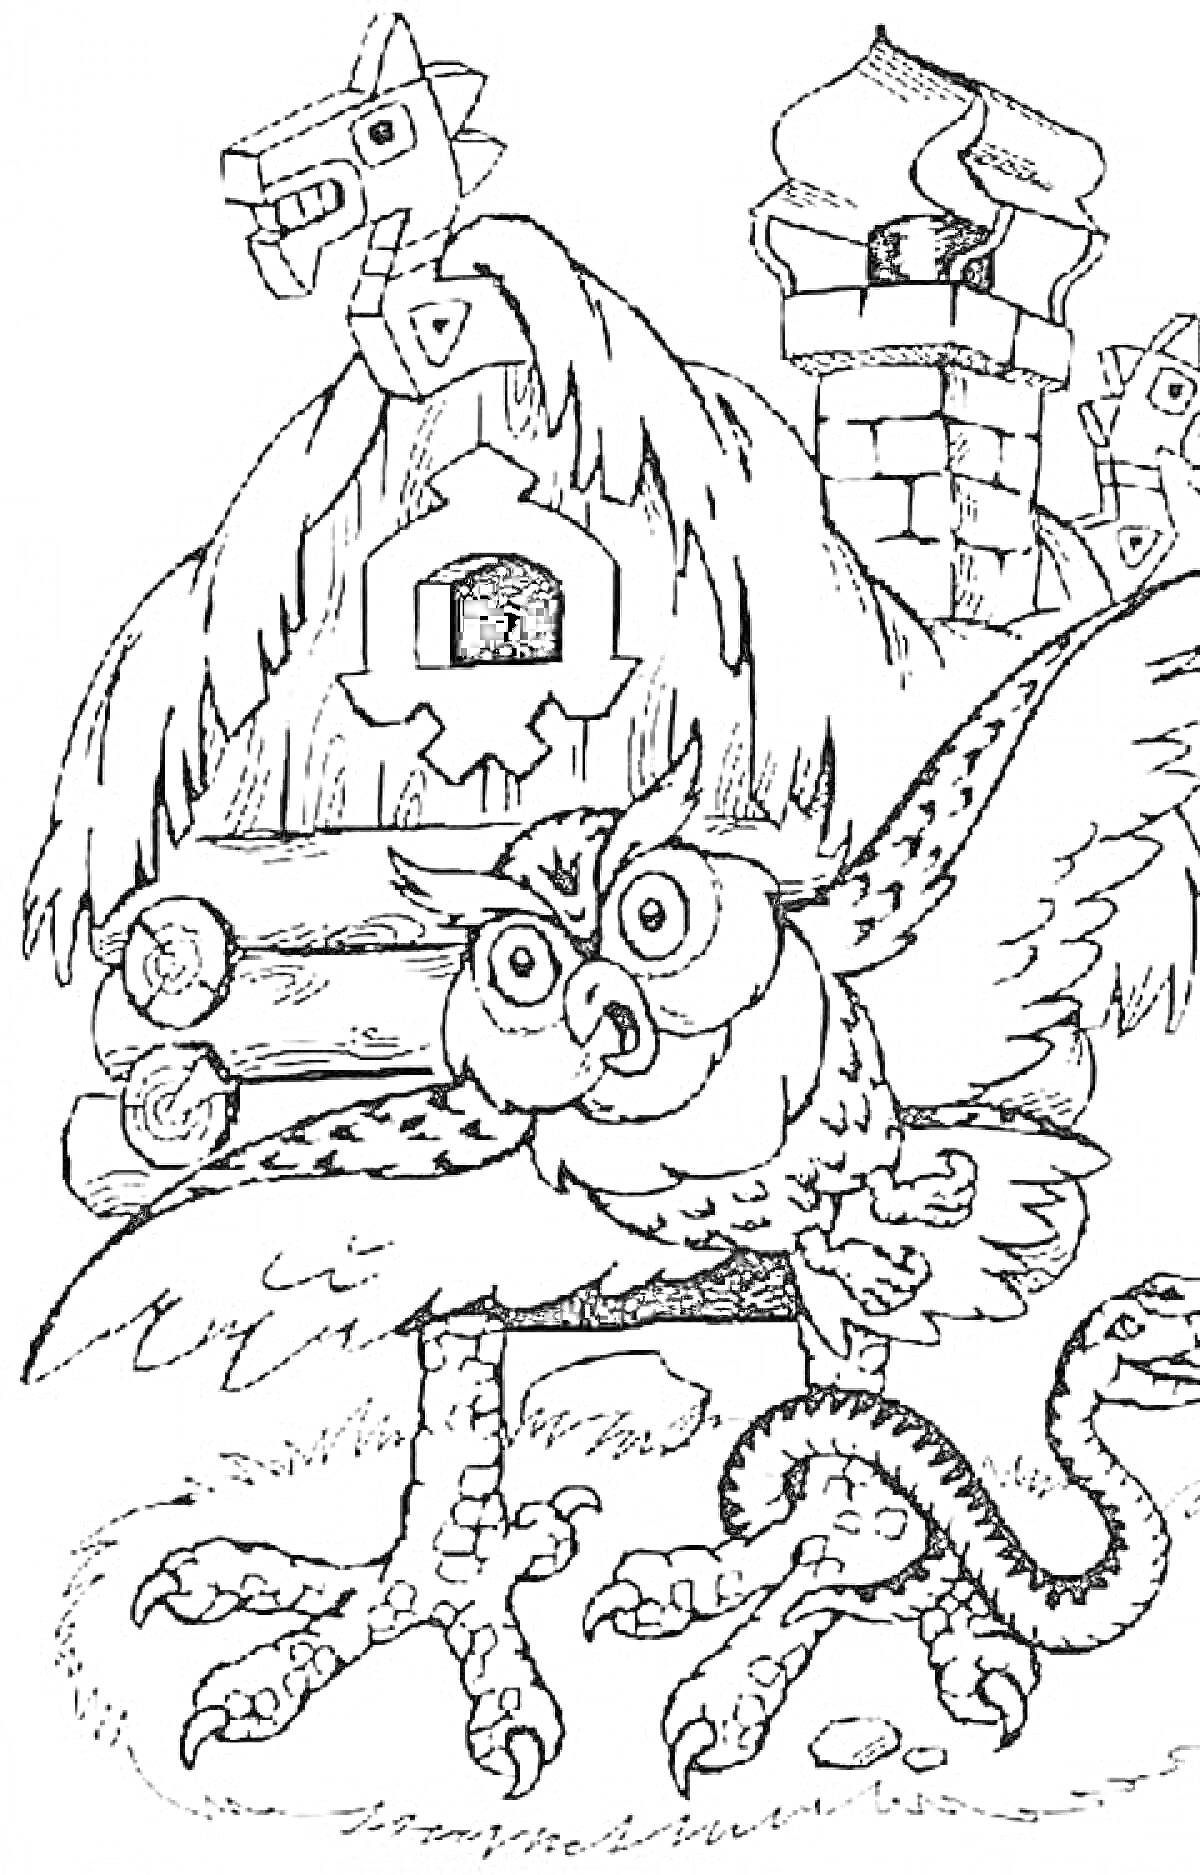 На раскраске изображено: Сова, Избушка на курьих ножках, Дуб, Из сказок, Змеи